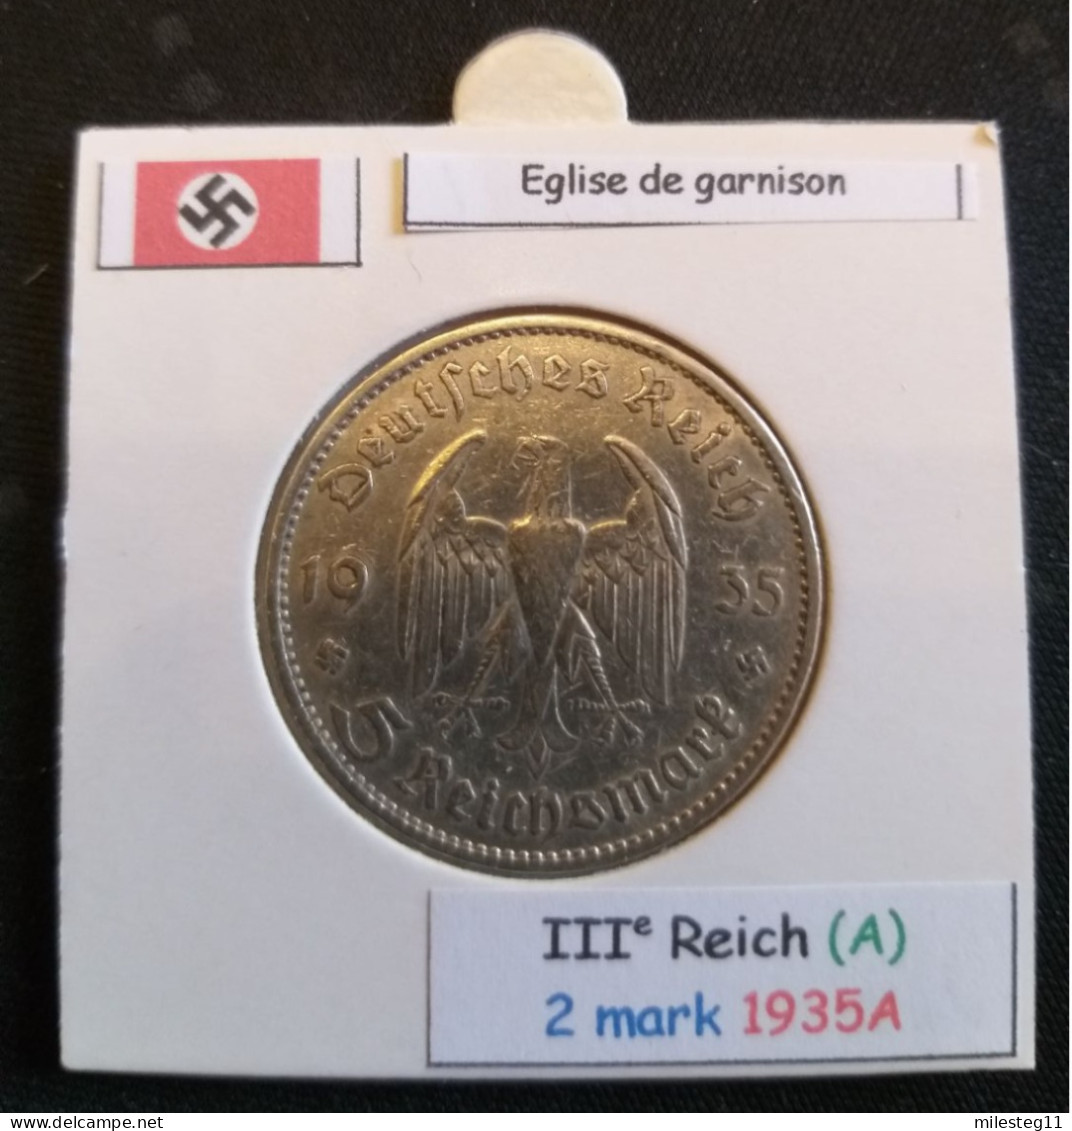 Pièce De 5 Reichsmark De 1935A (Berlin) Eglise De Garnison (position A) - 5 Reichsmark